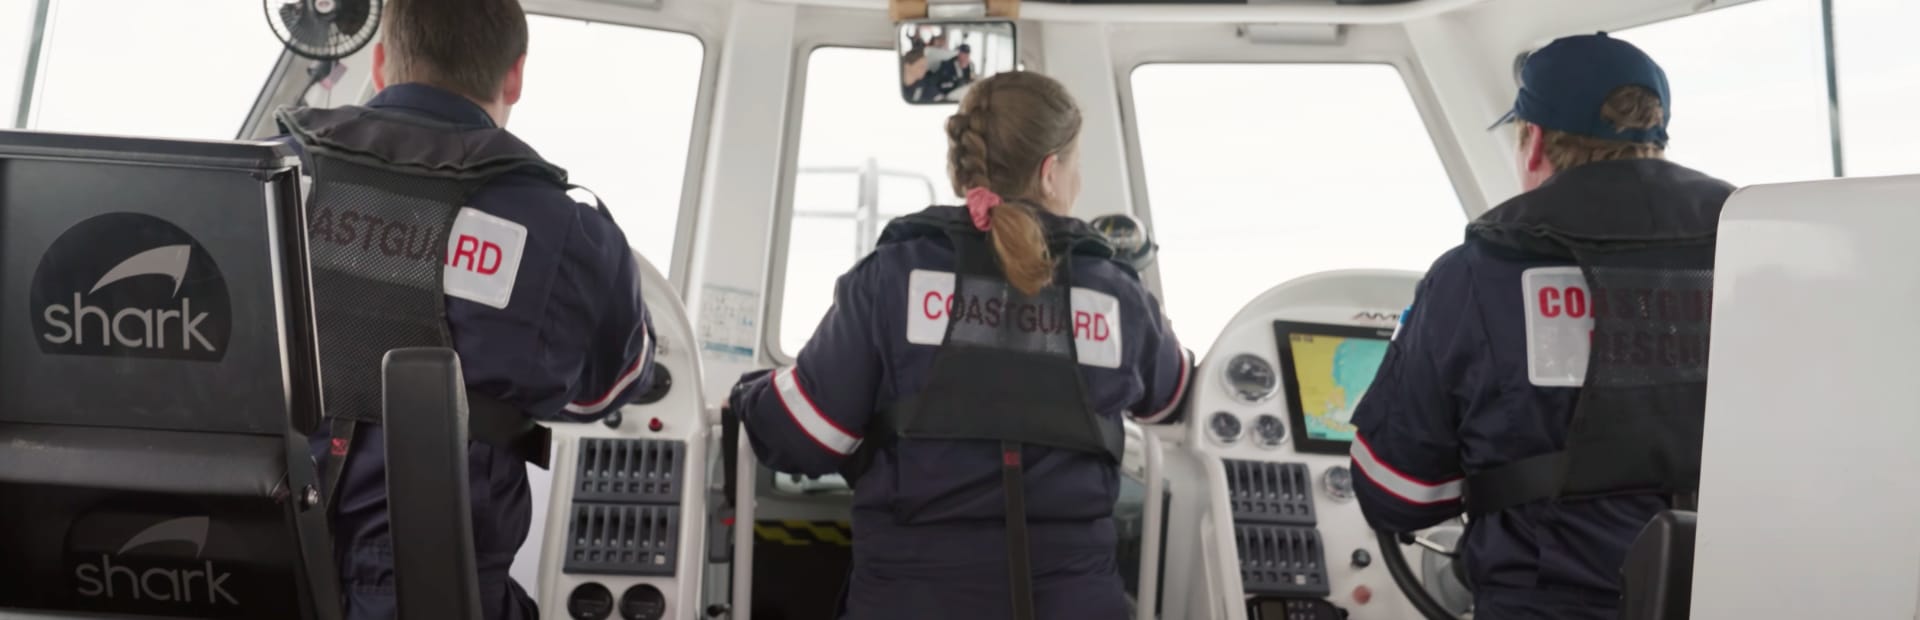 CK Rescue inside cabin - Coastguard Hawke's Bay